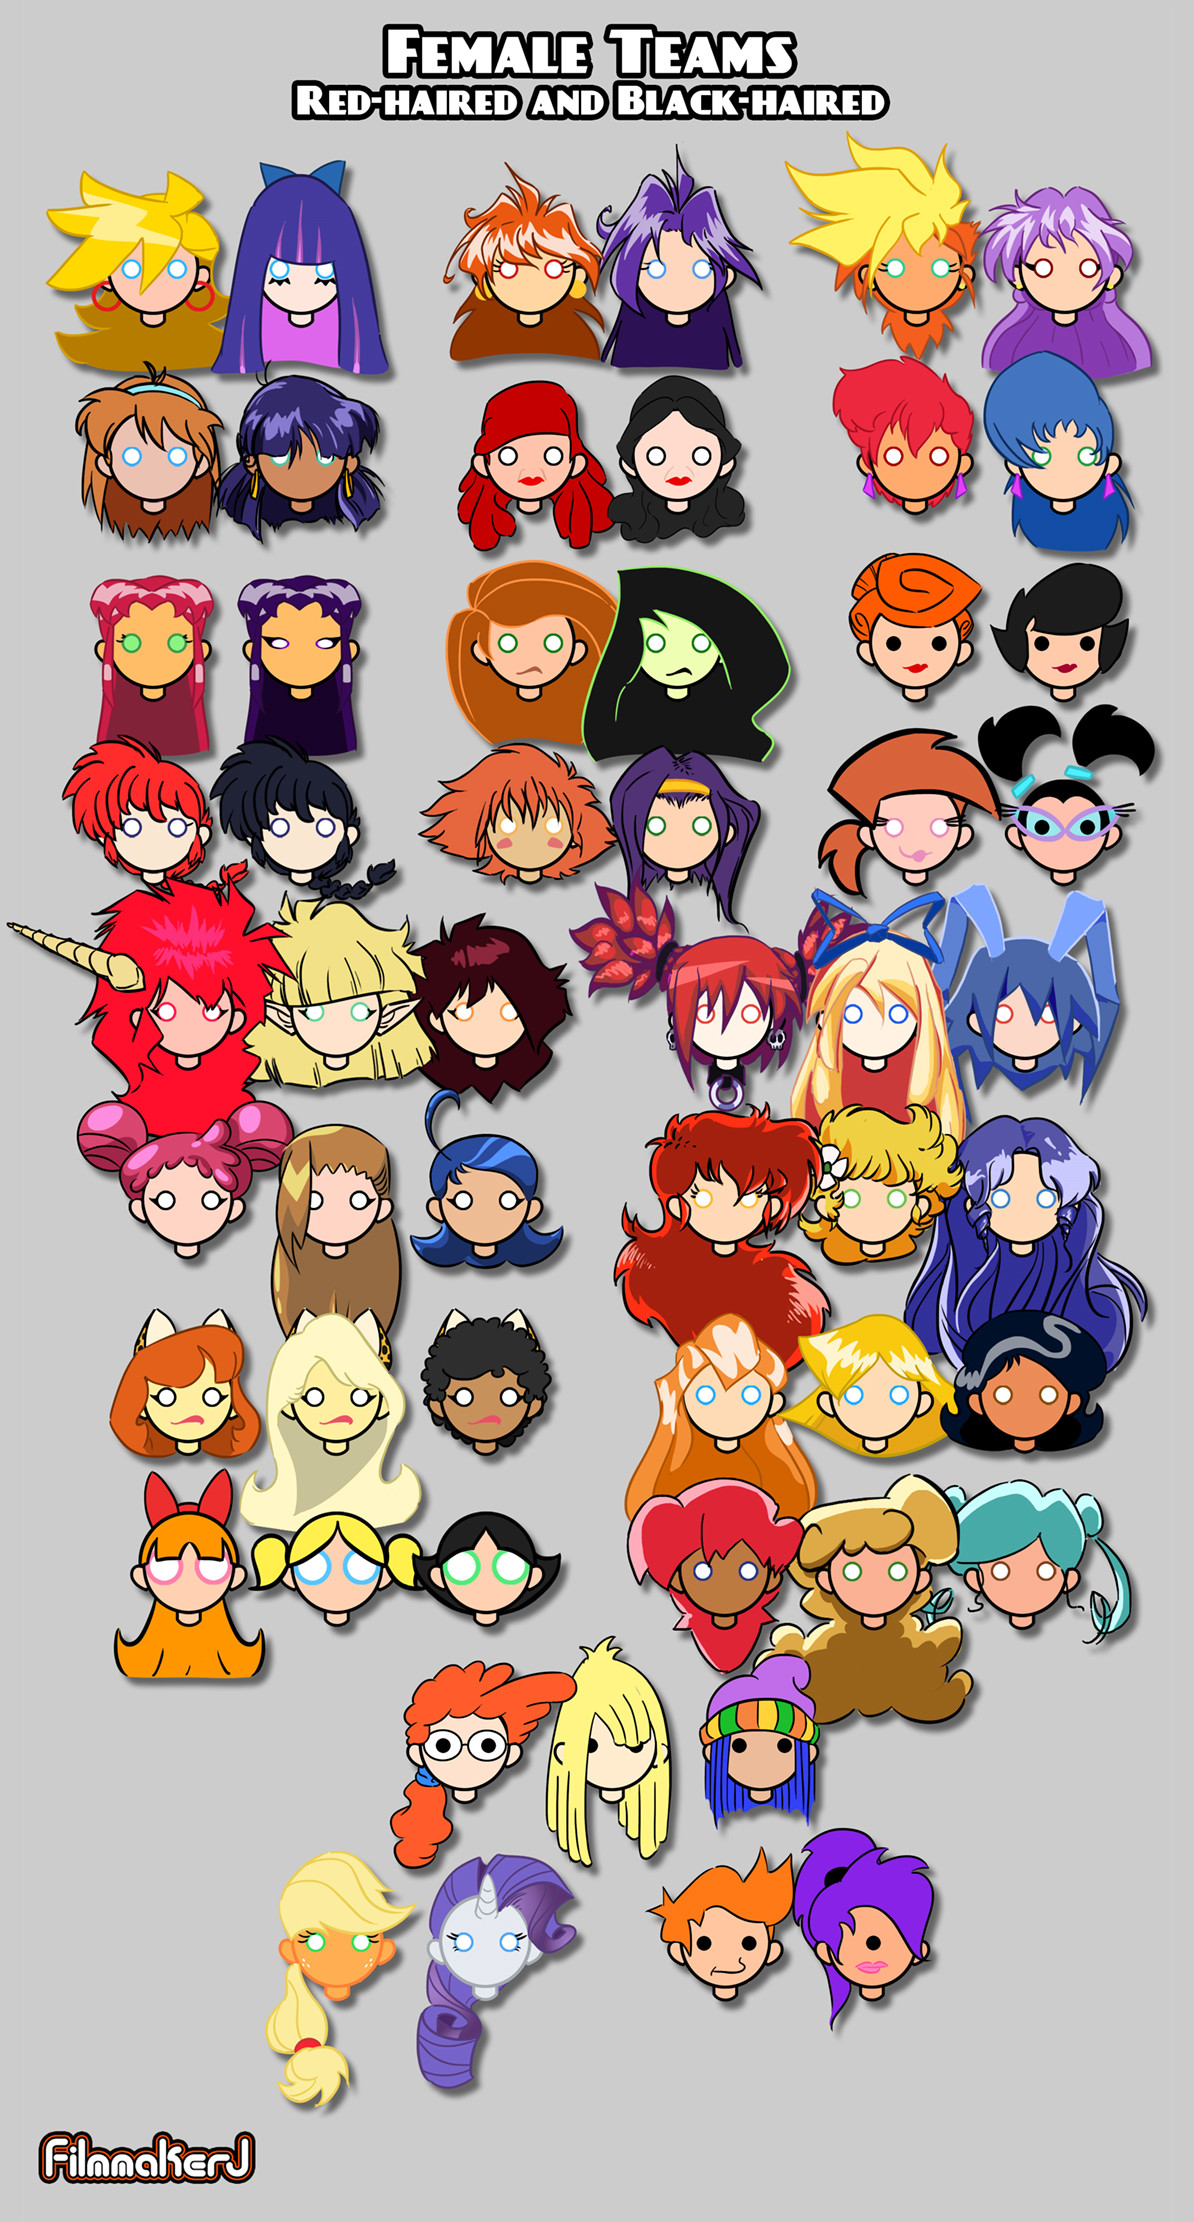 ArtStation - Female Animated Teams - Red hair and Black hair